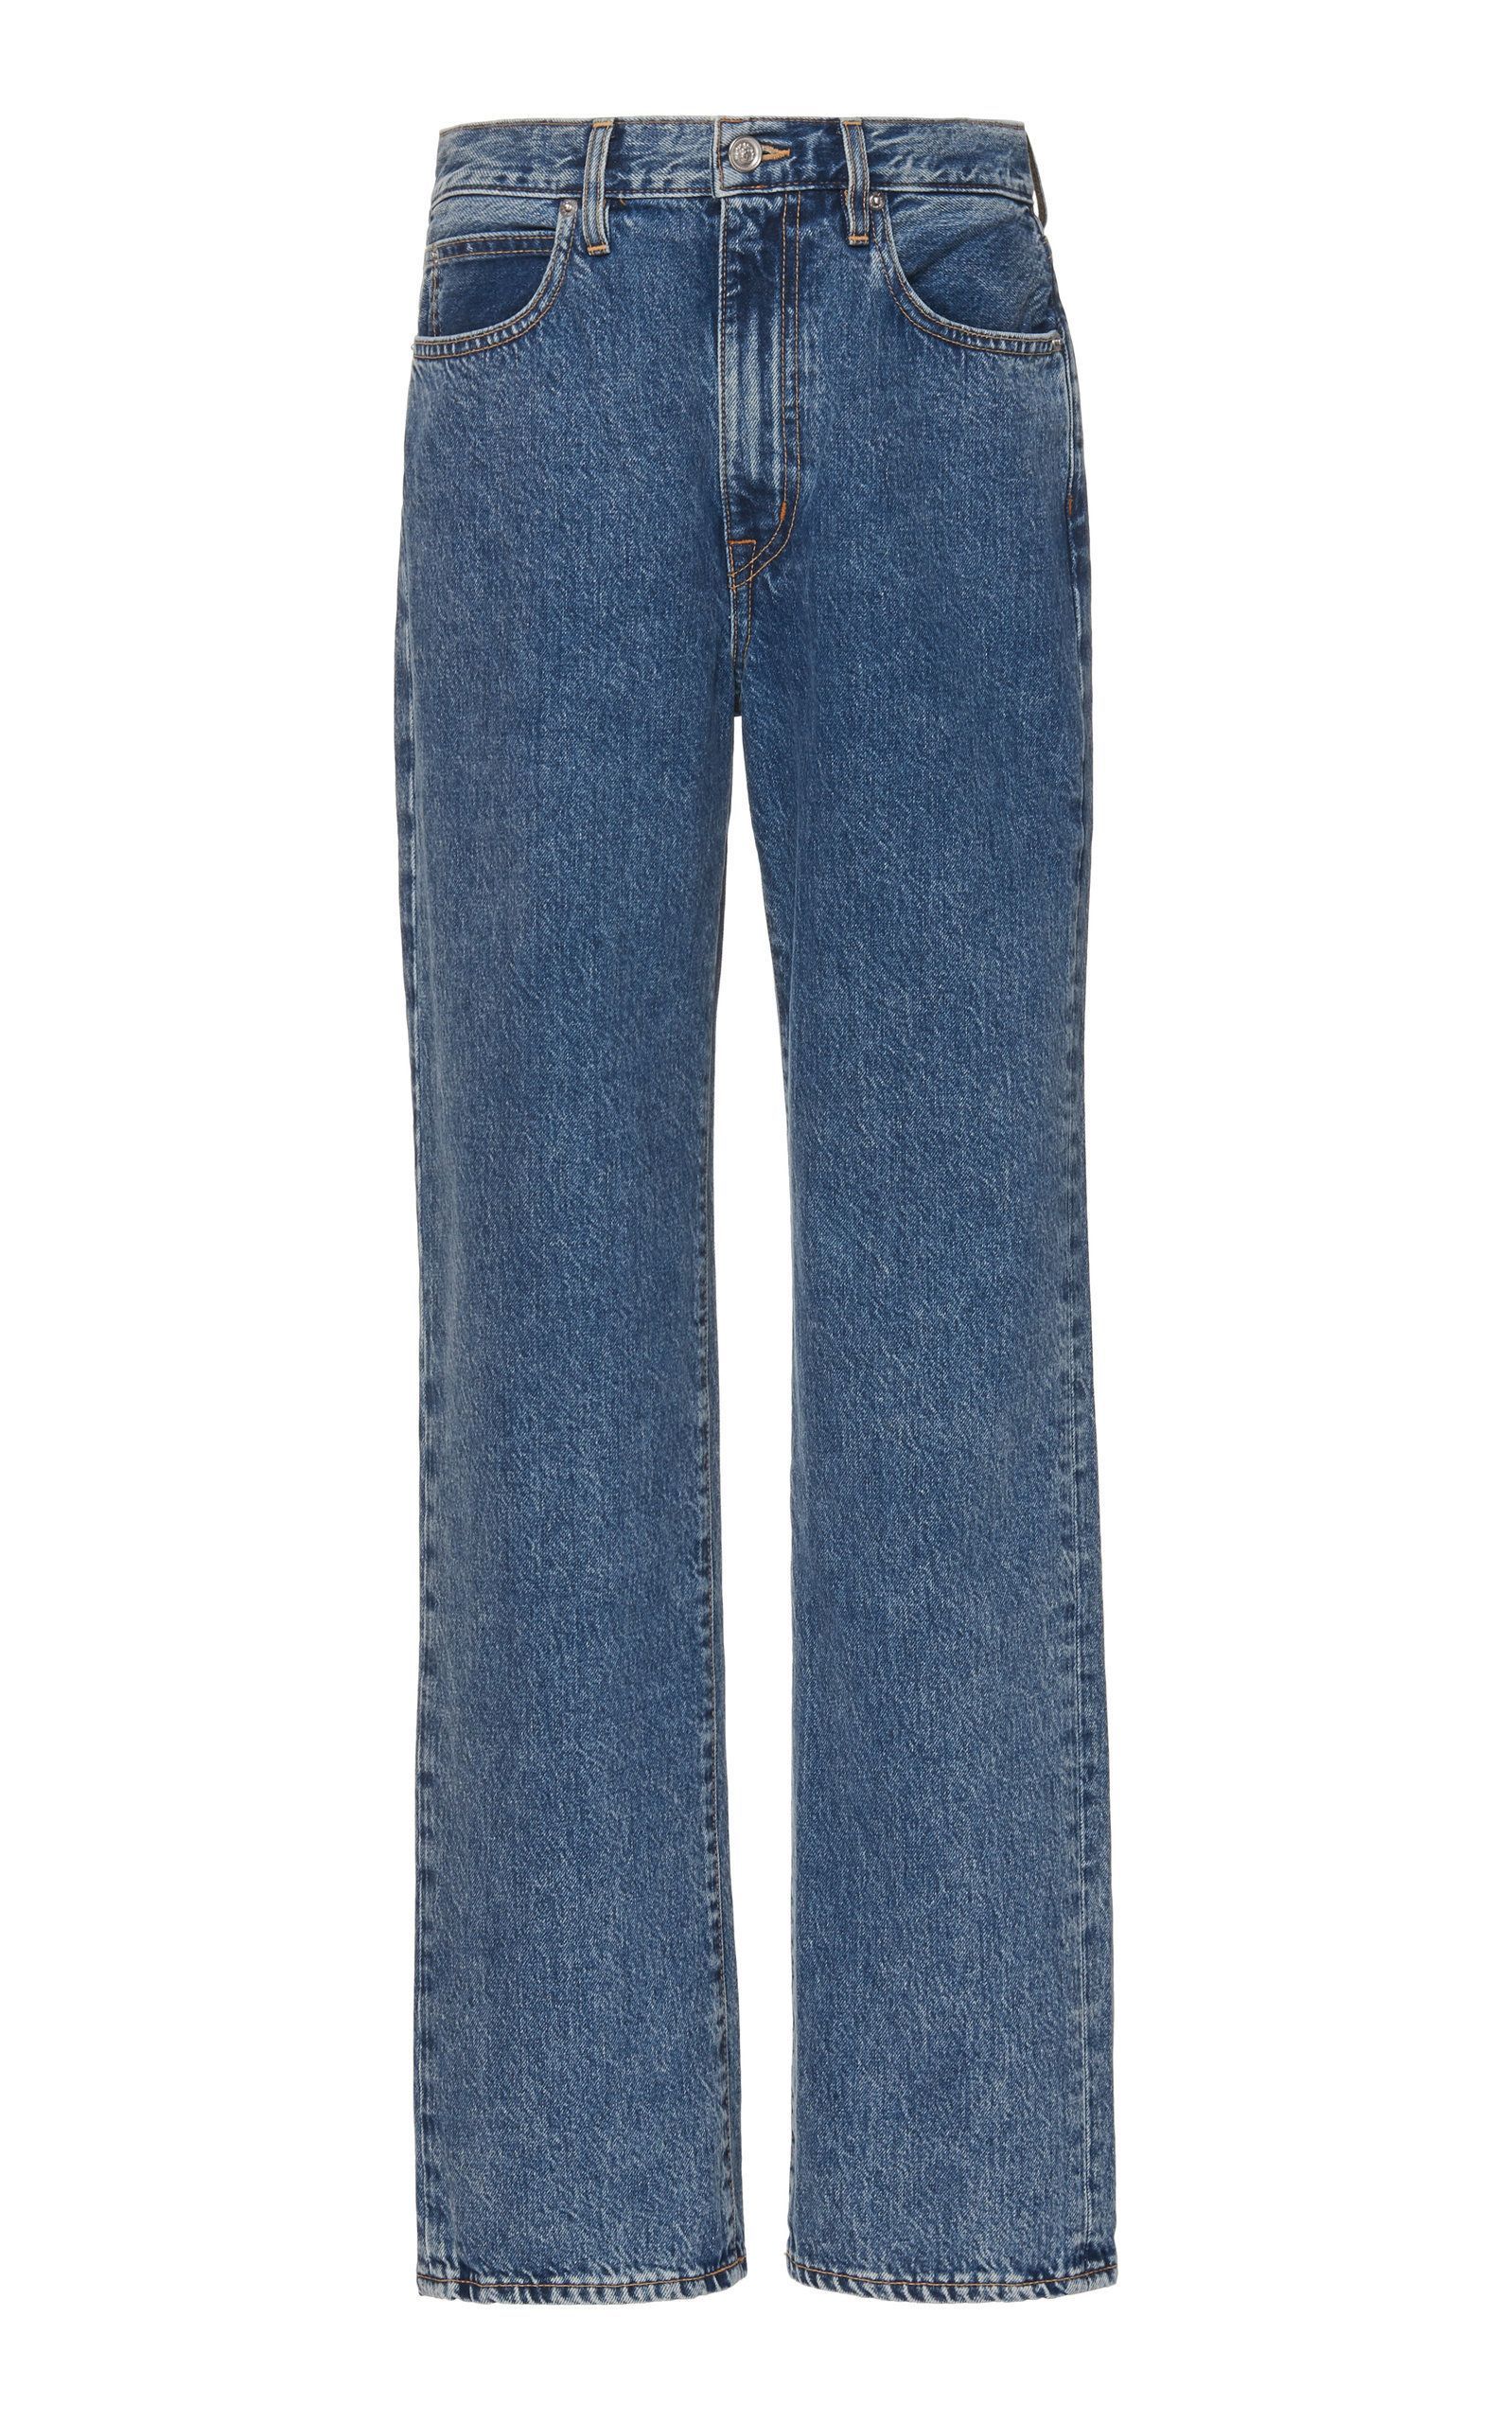 agolde palmer jeans